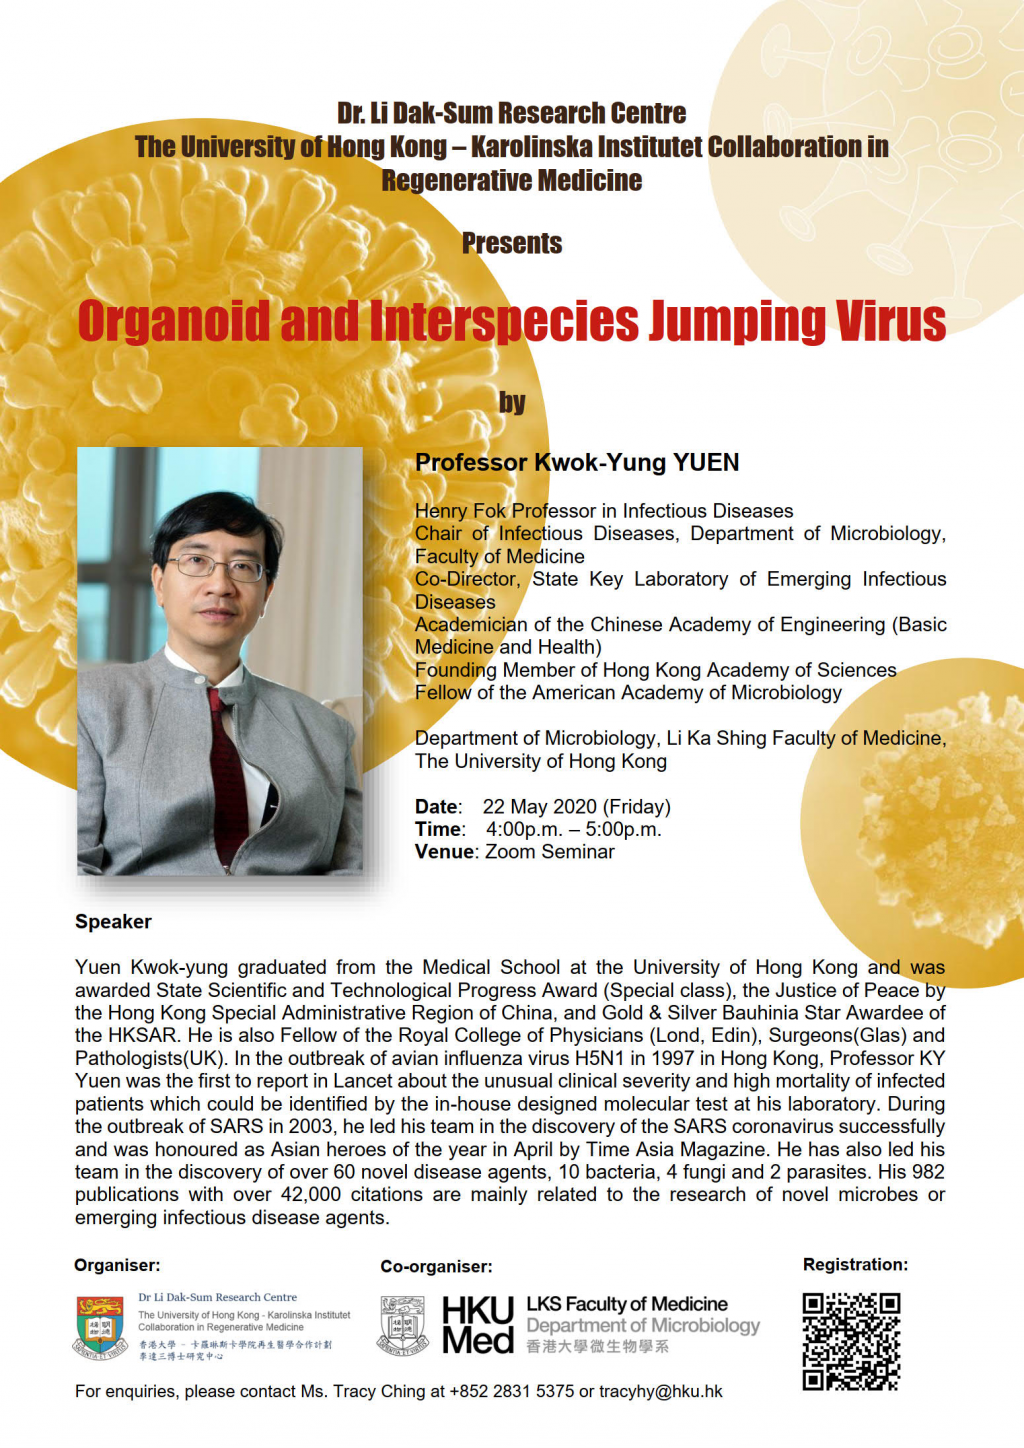 [Zoom Seminar Series] Organoid and Interspecies Jumping Virus by Professor Kwok-Yung YUEN